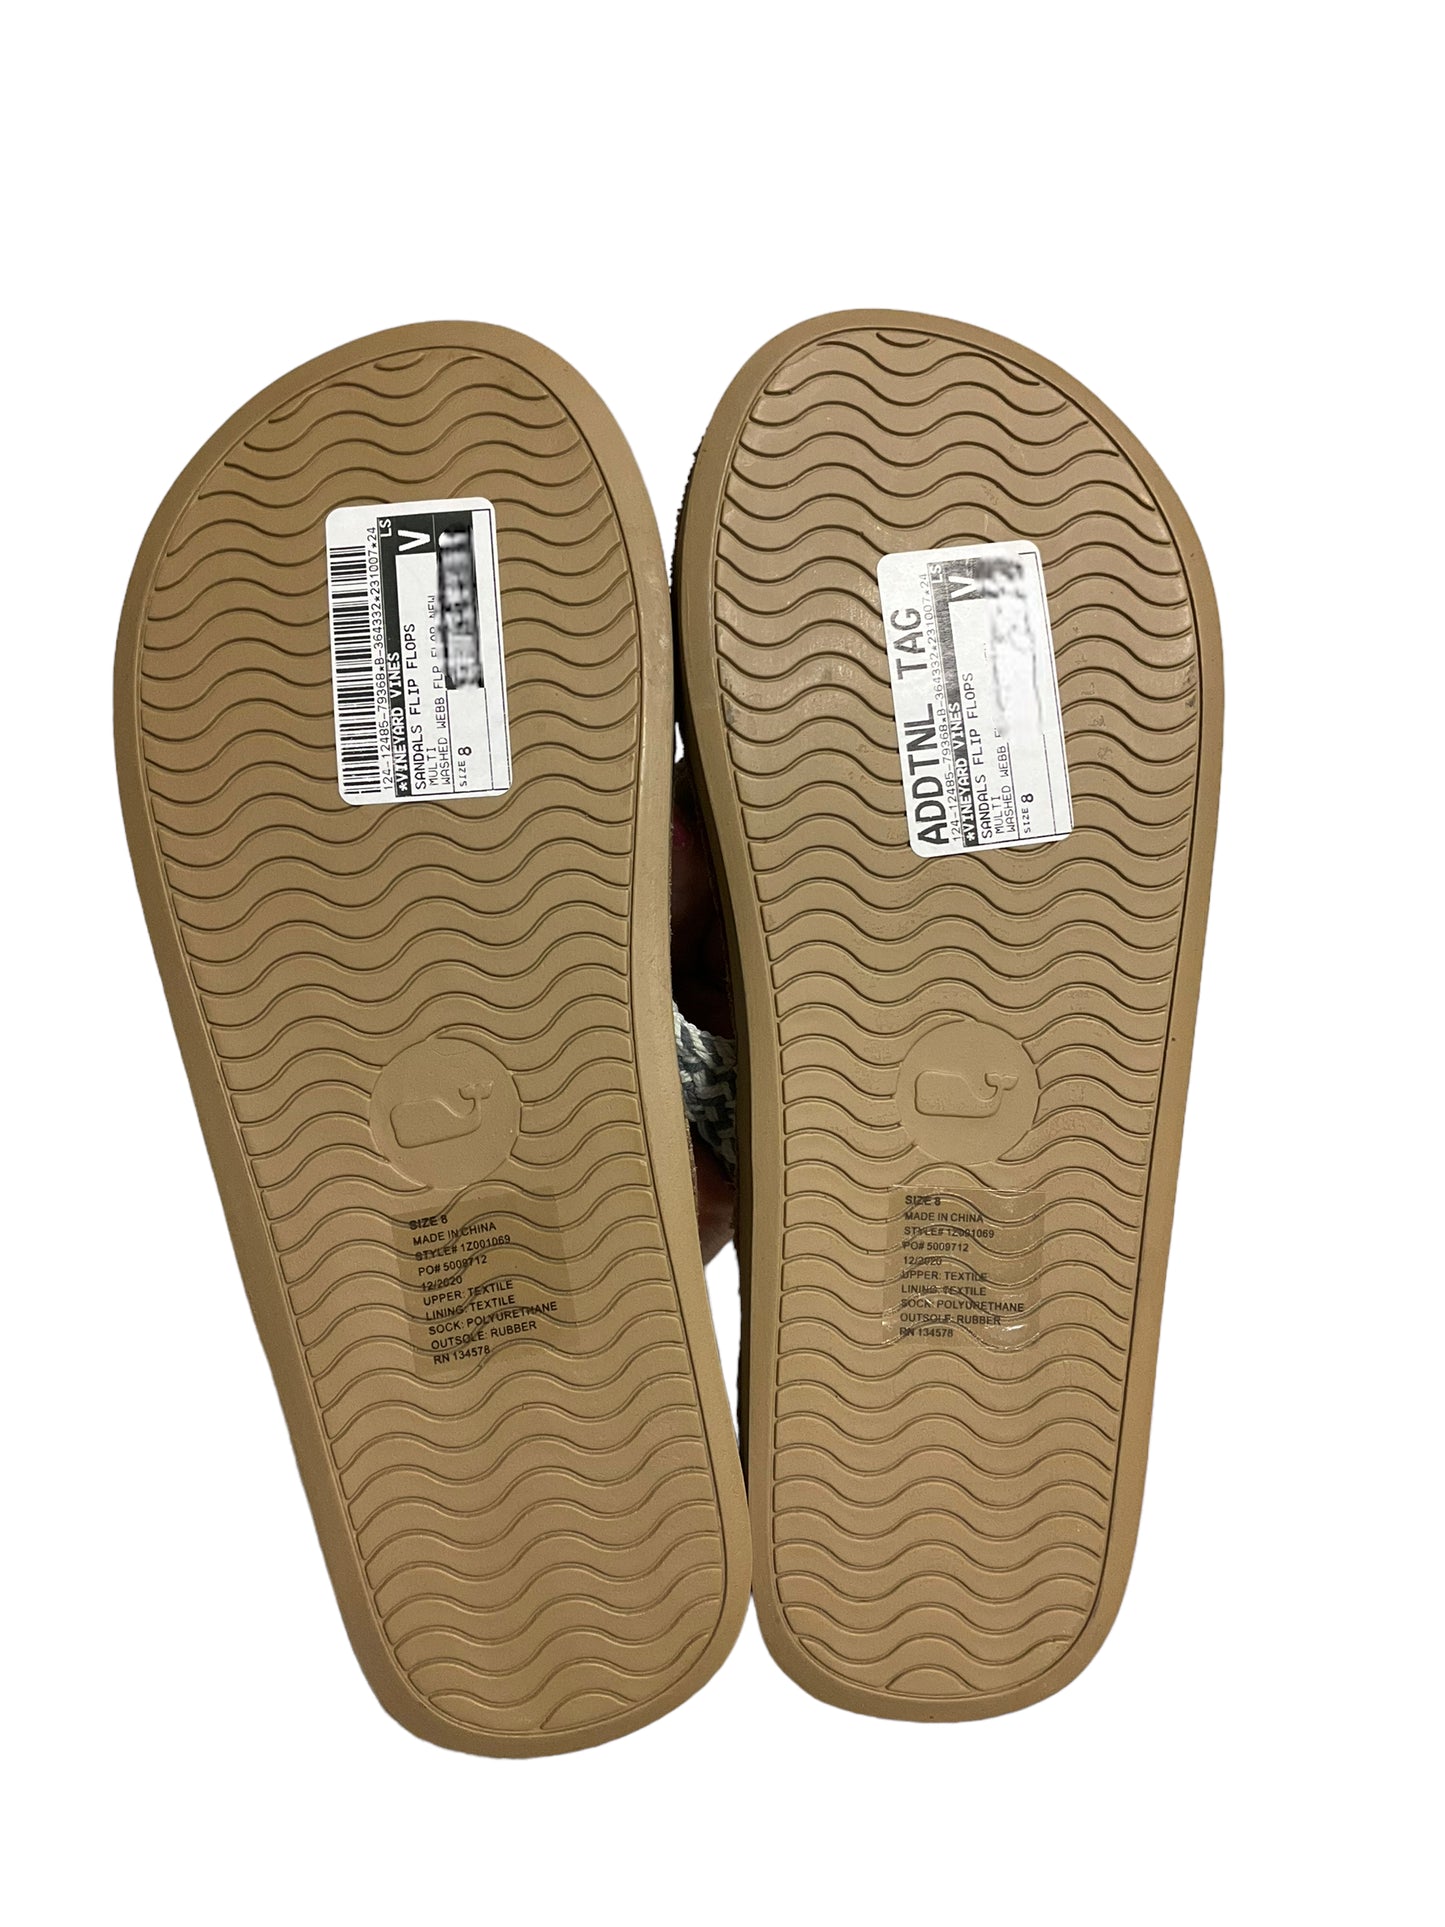 Sandals Flip Flops By Vineyard Vines  Size: 8